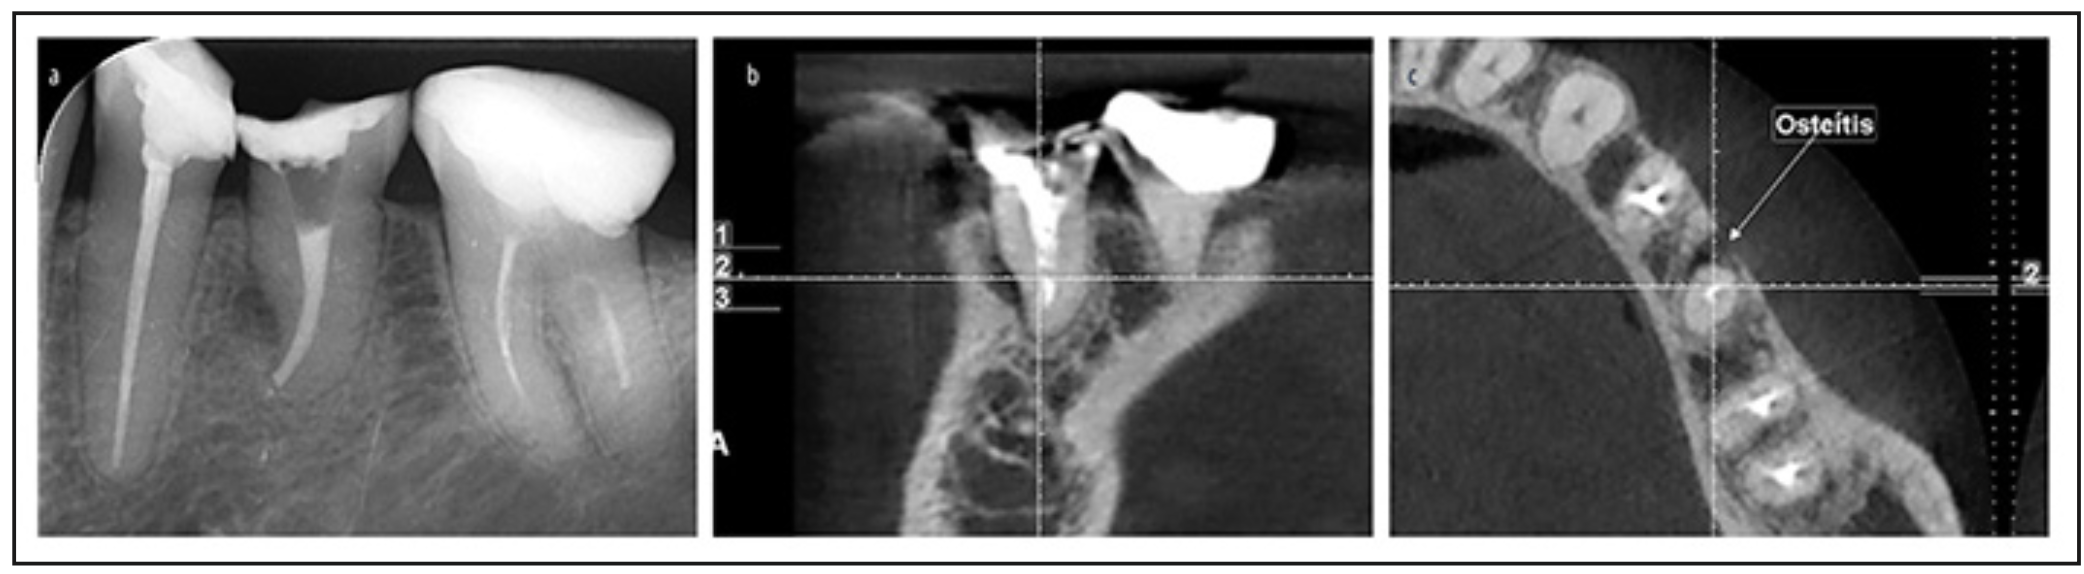 Figura 1. A) radiografía pre operatoria. B) corte coronal tomográfico pre operatorio. C) corte transversal tomográfico preoperatorio.